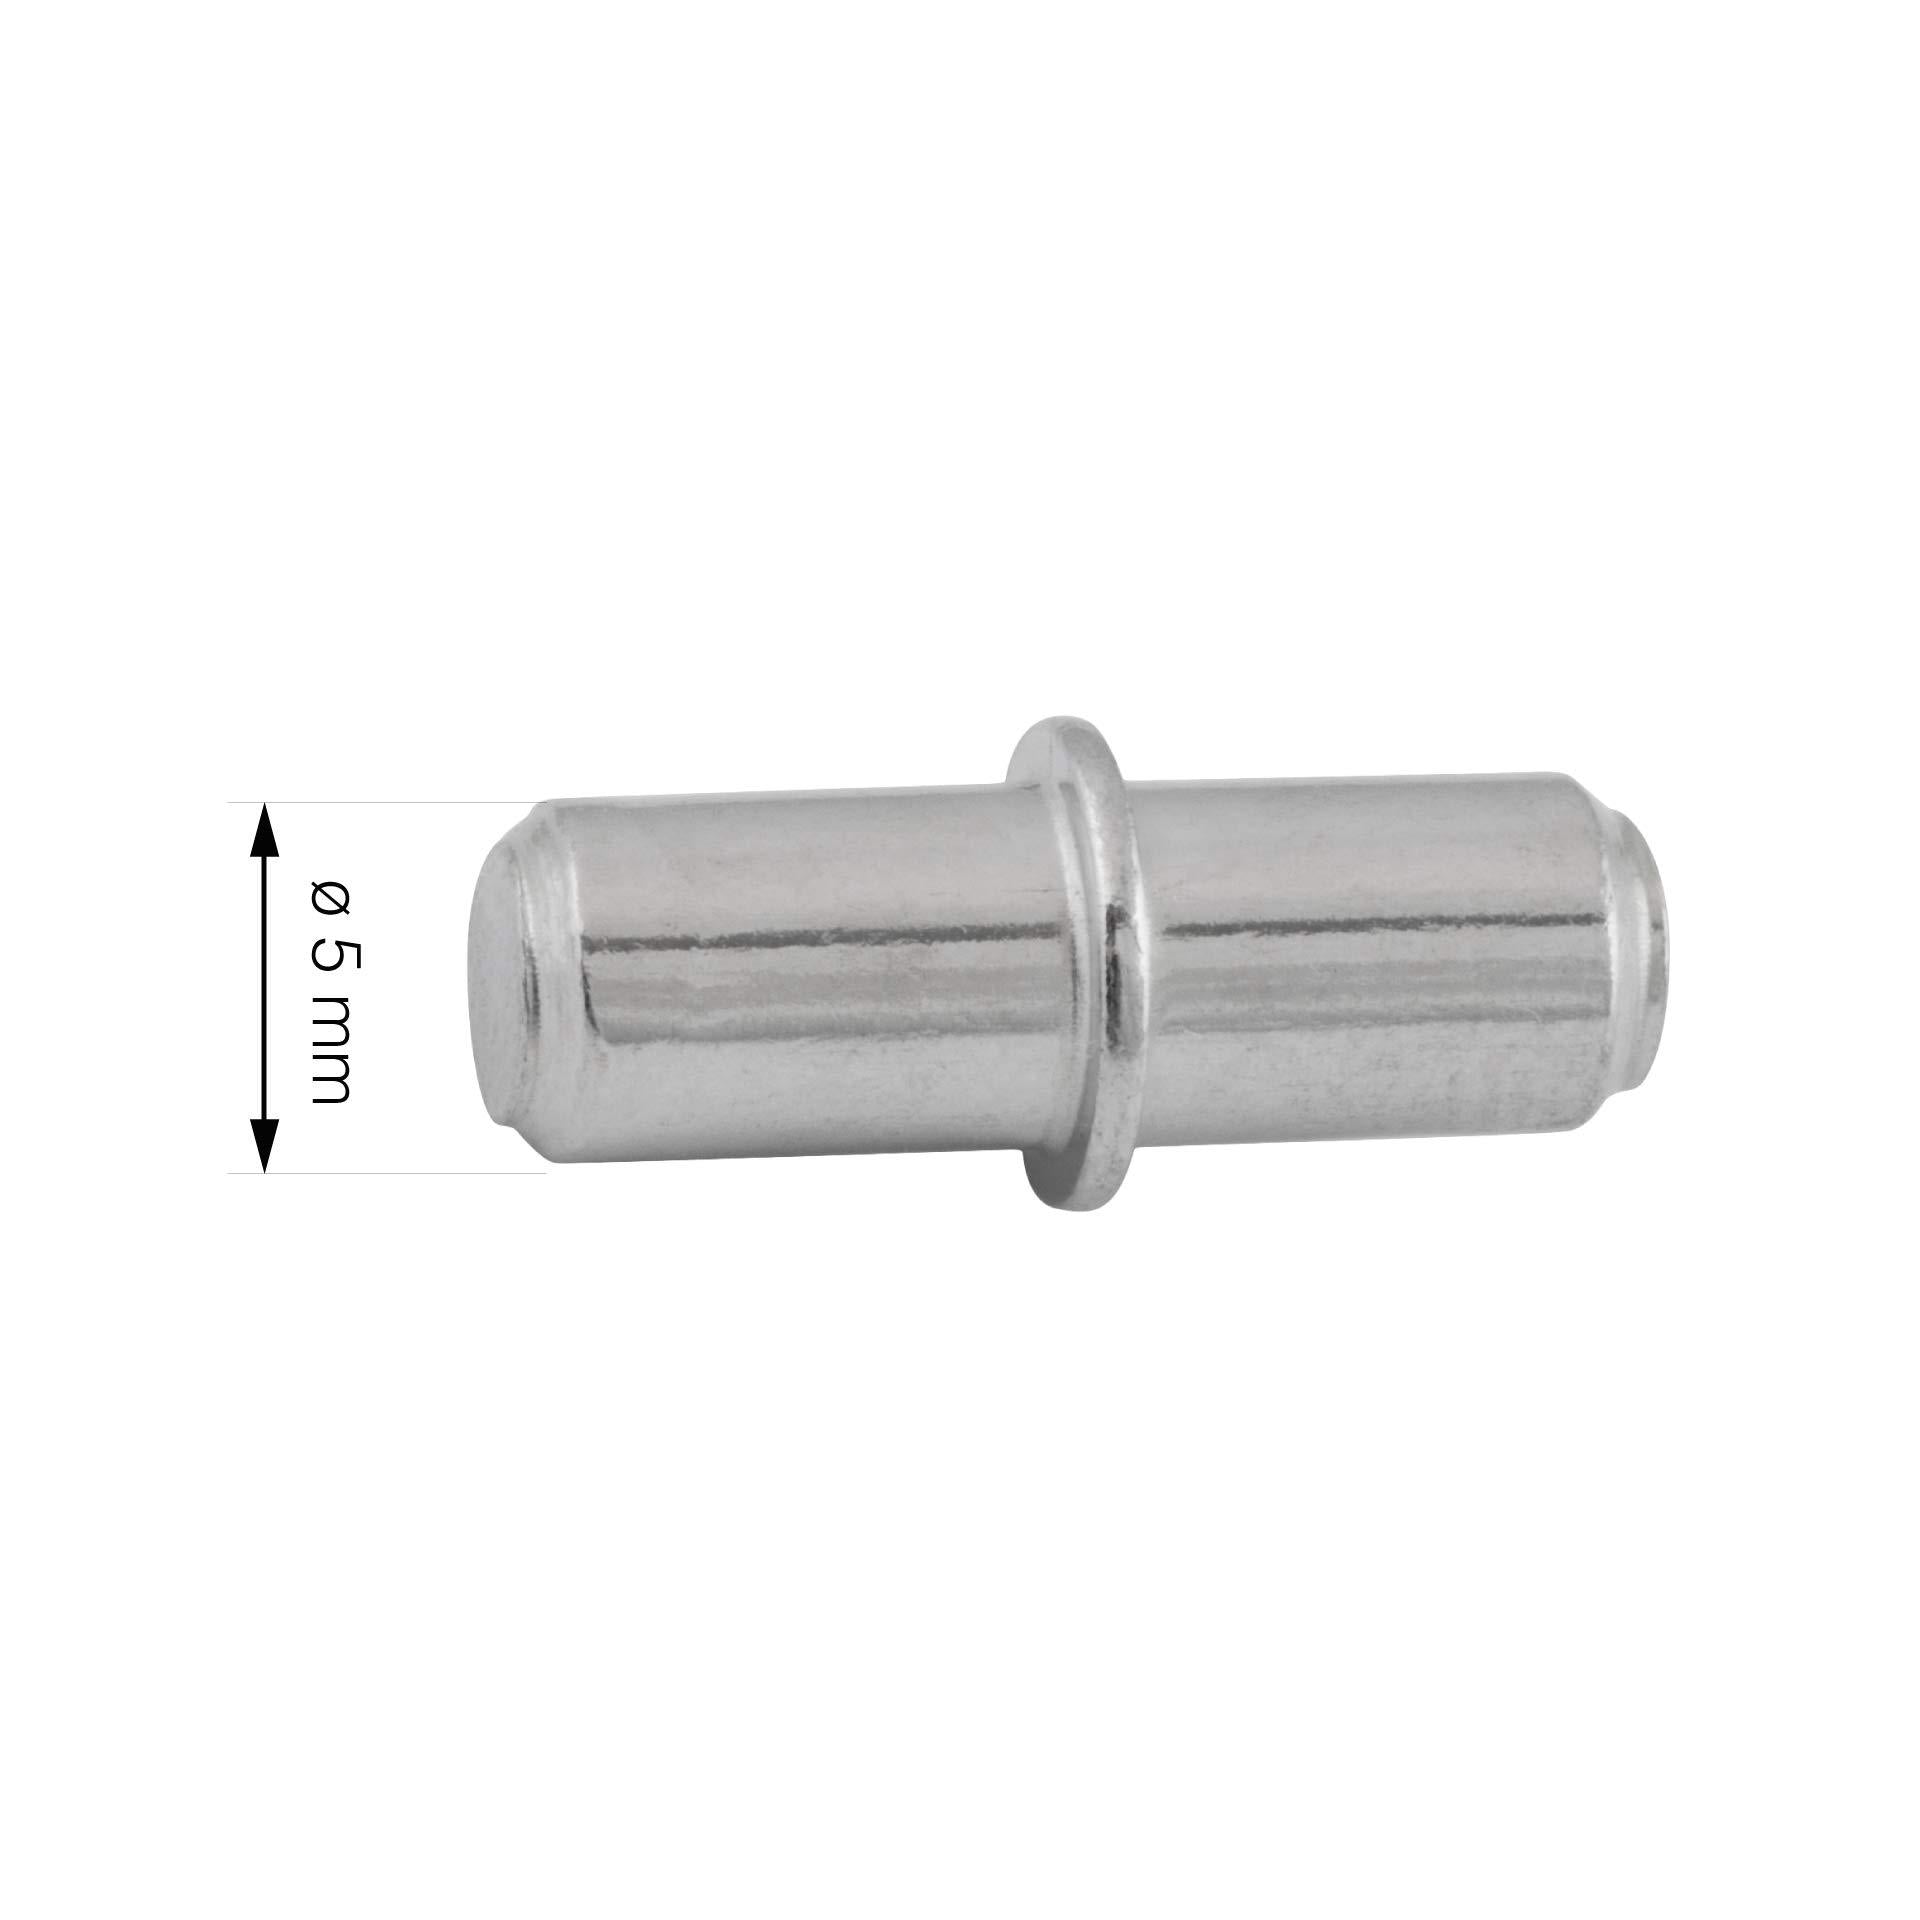 LouMaxx Bodenträger 5 mm 100 Stück mit Ring für Bohrung – Einlegeboden Halter - Fachbodenträger - Bretthalter - Regalbretthalter - Regalbodenträger